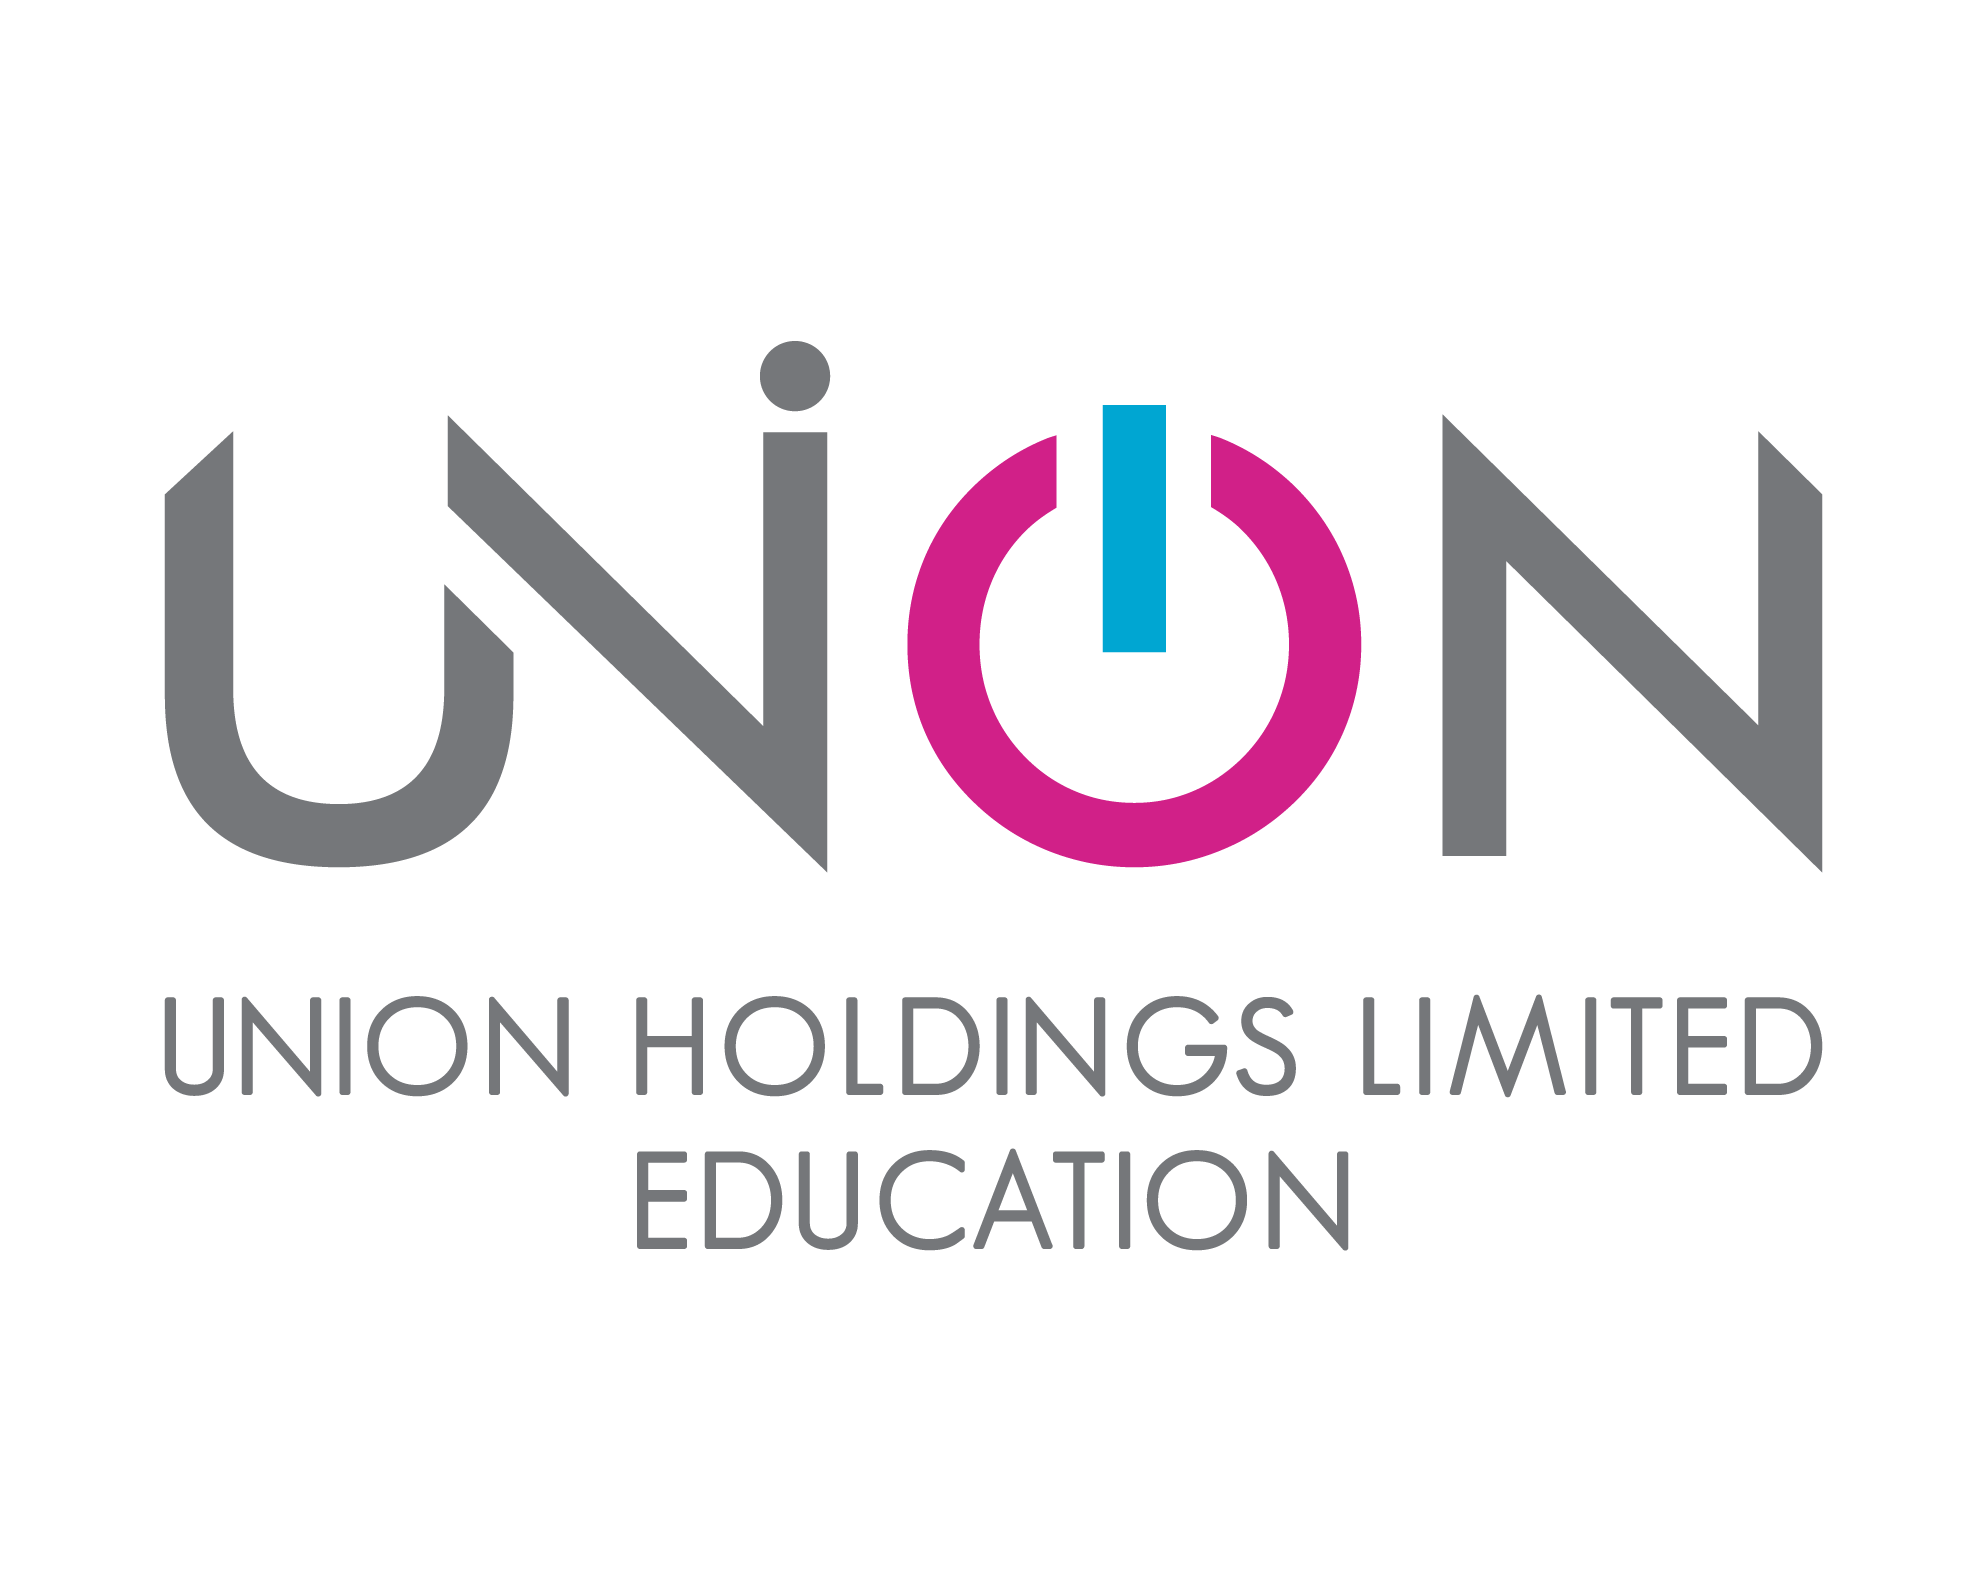 Union Education